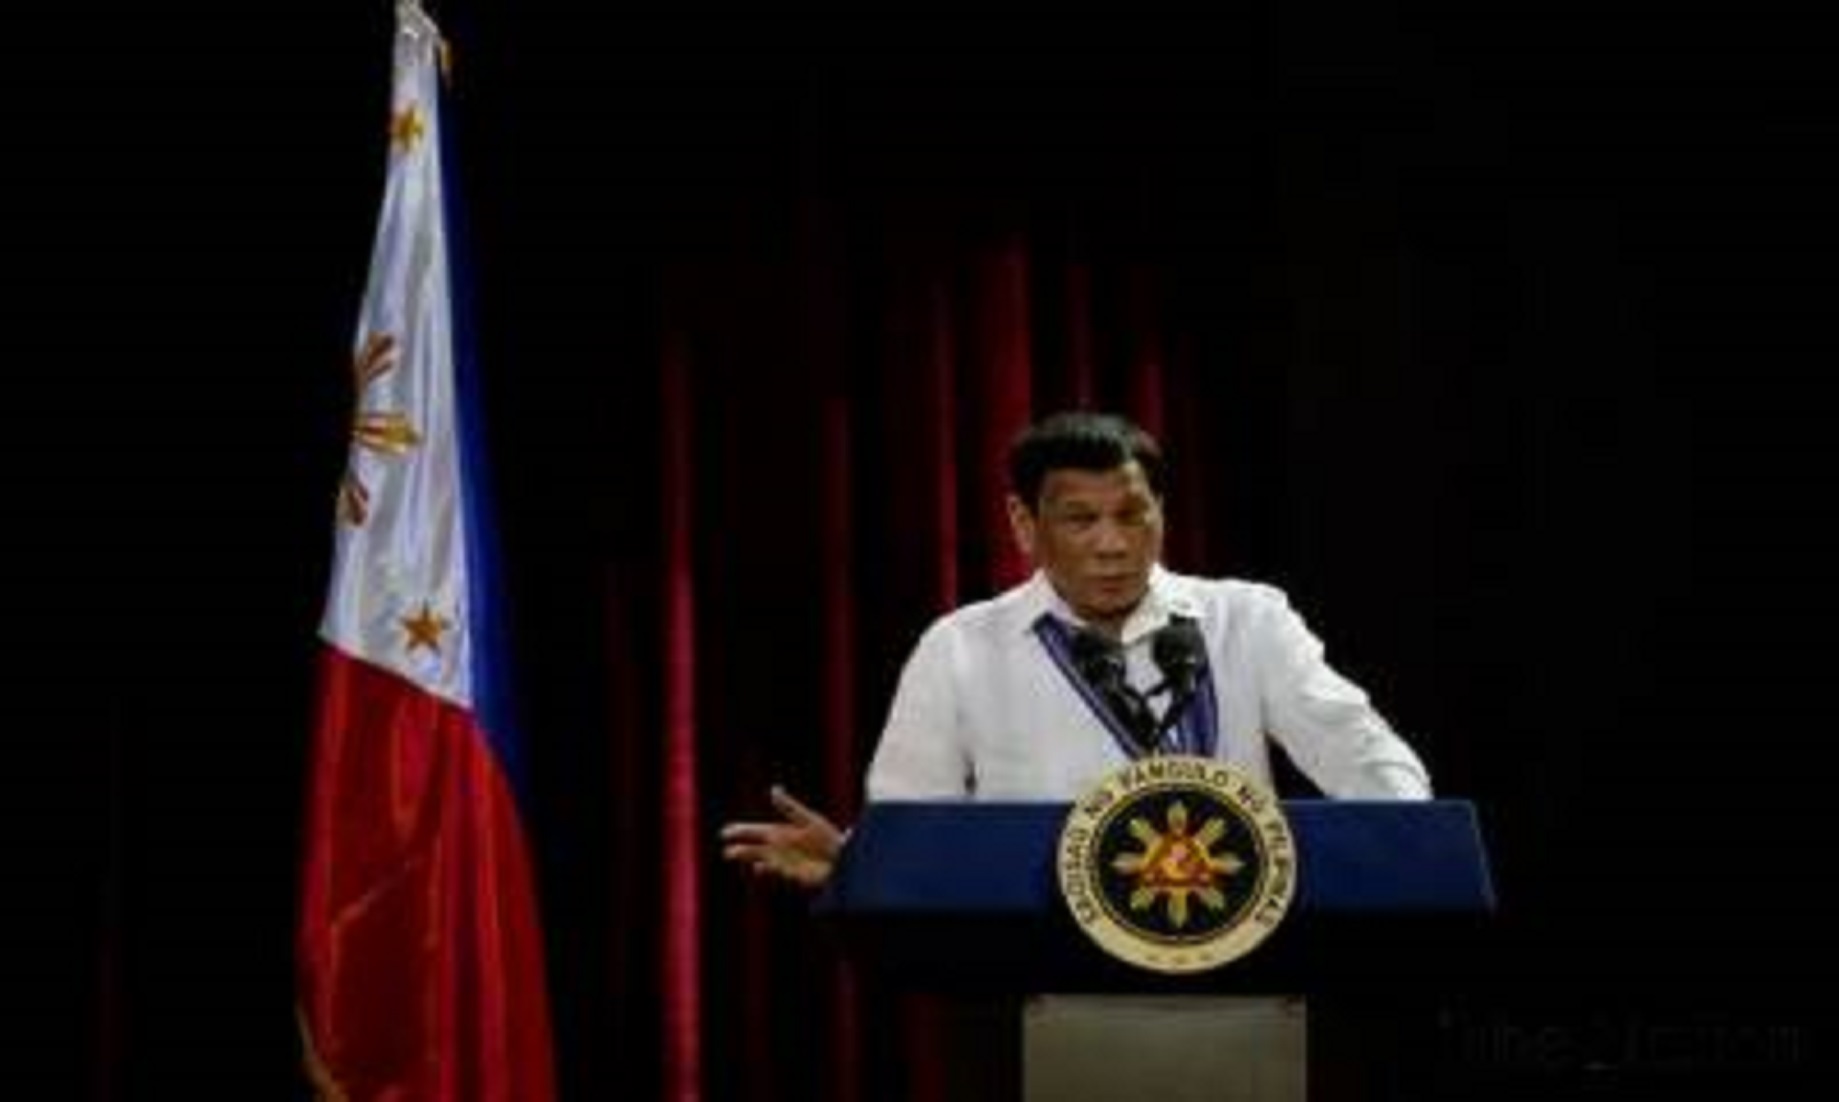 Covid-19: Philippines’ Pres Duterte threatens martial law if communist rebels disrupt virus aid